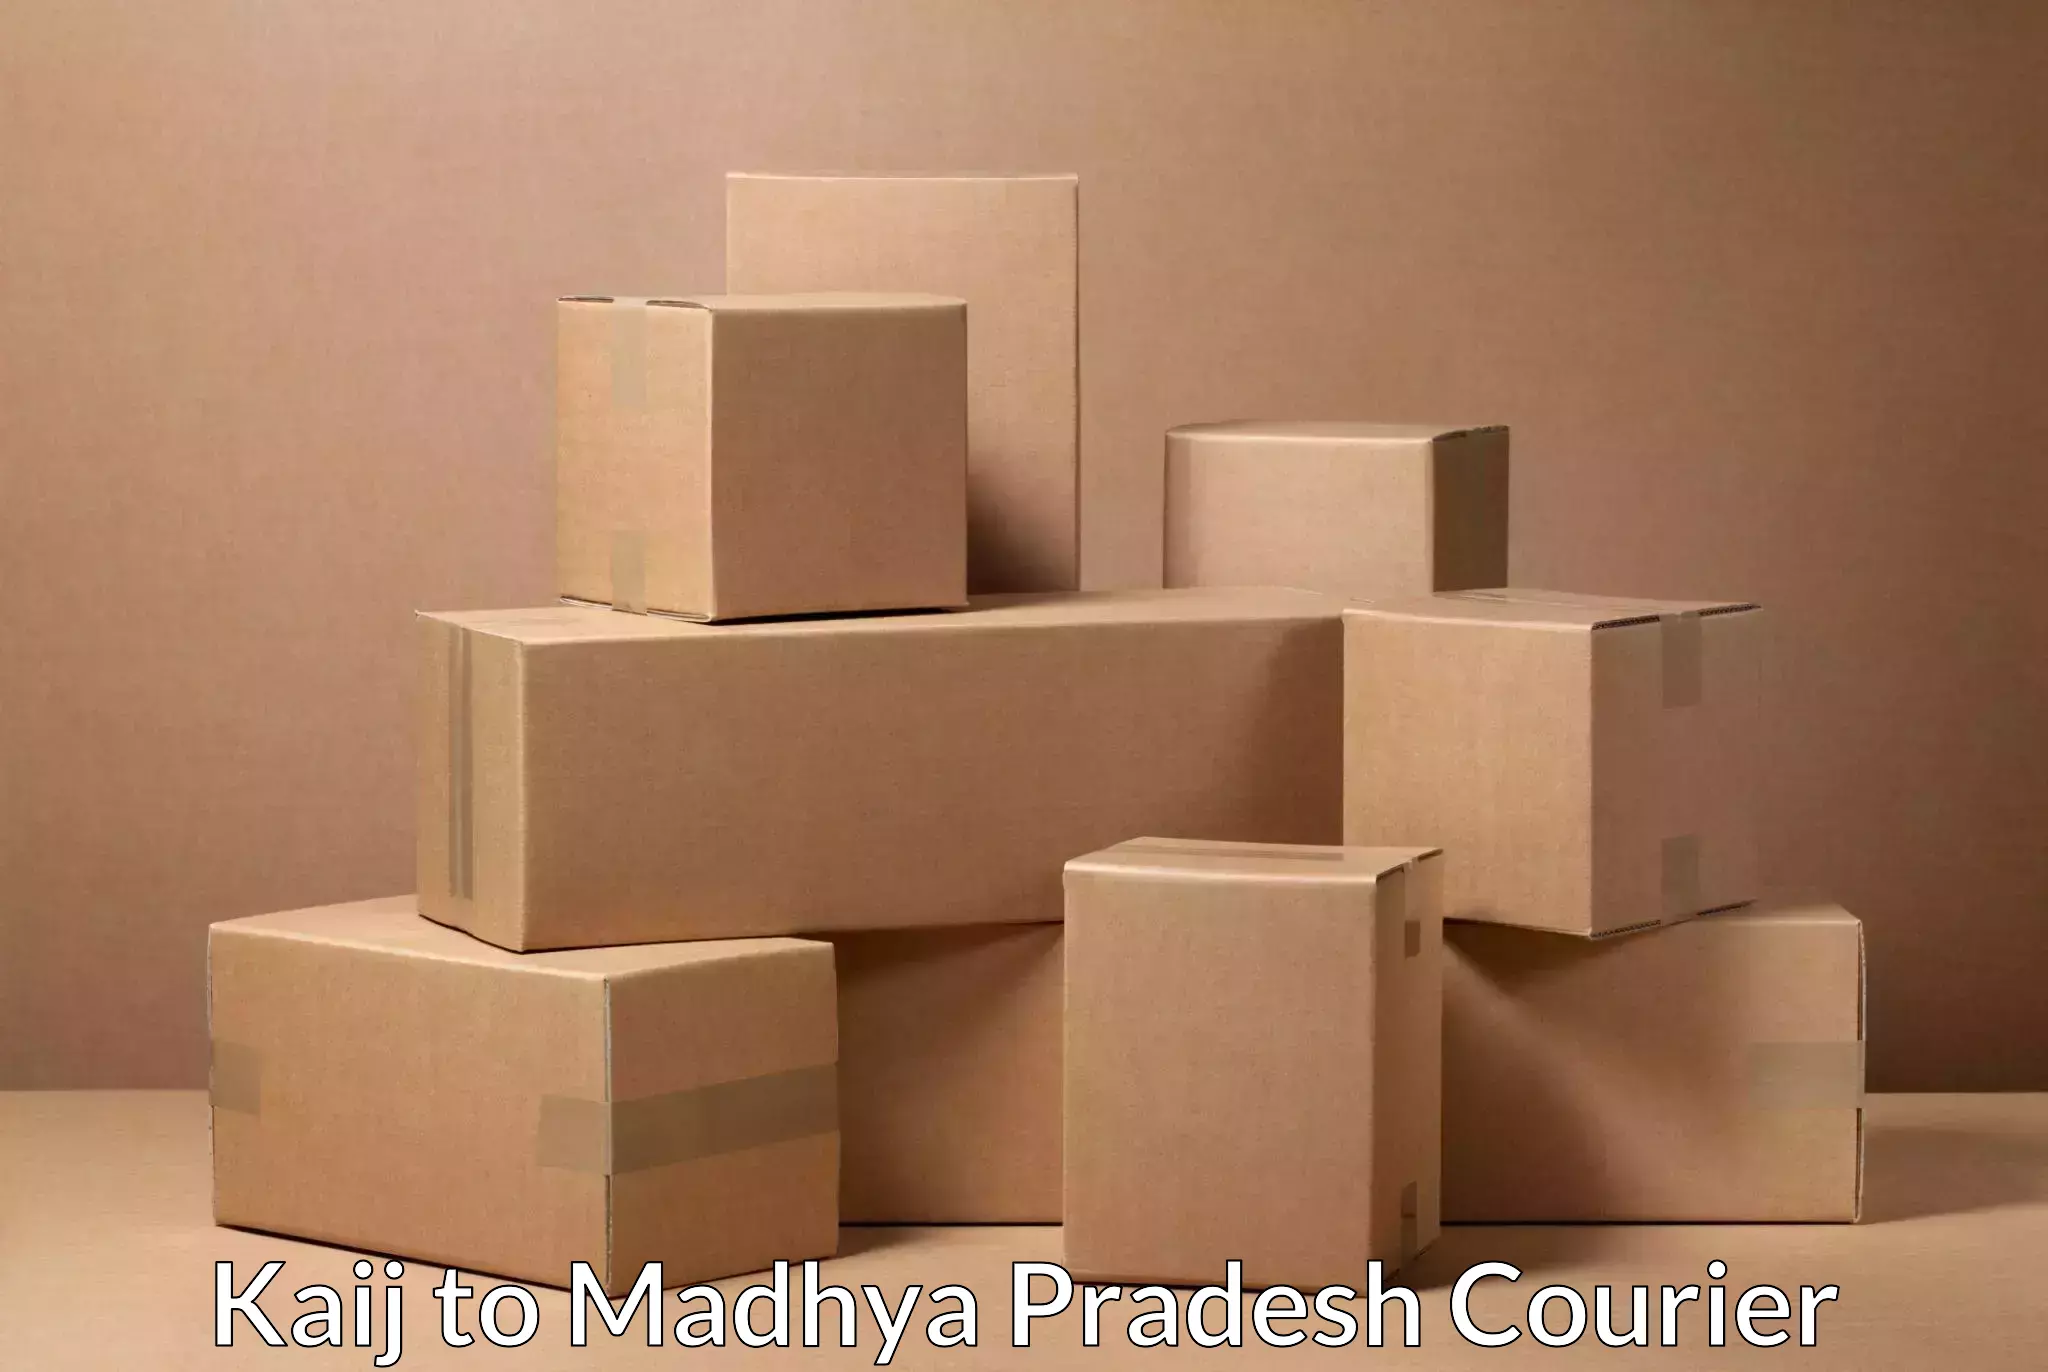 Premium courier services in Kaij to Madhya Pradesh